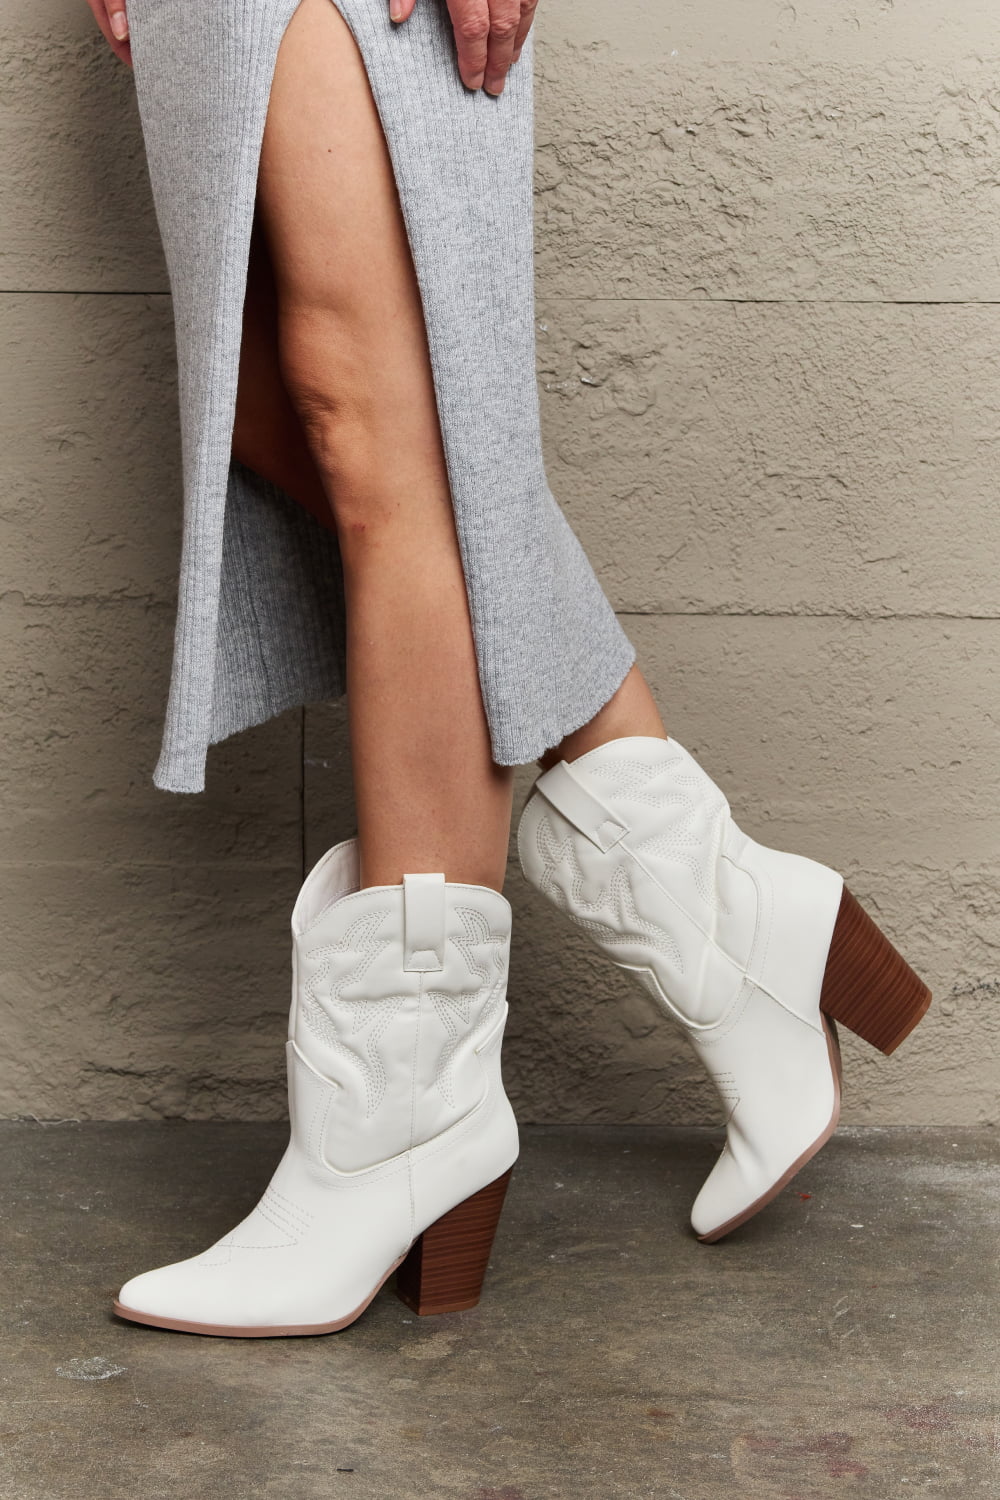 Bella Cowboy Boots in White